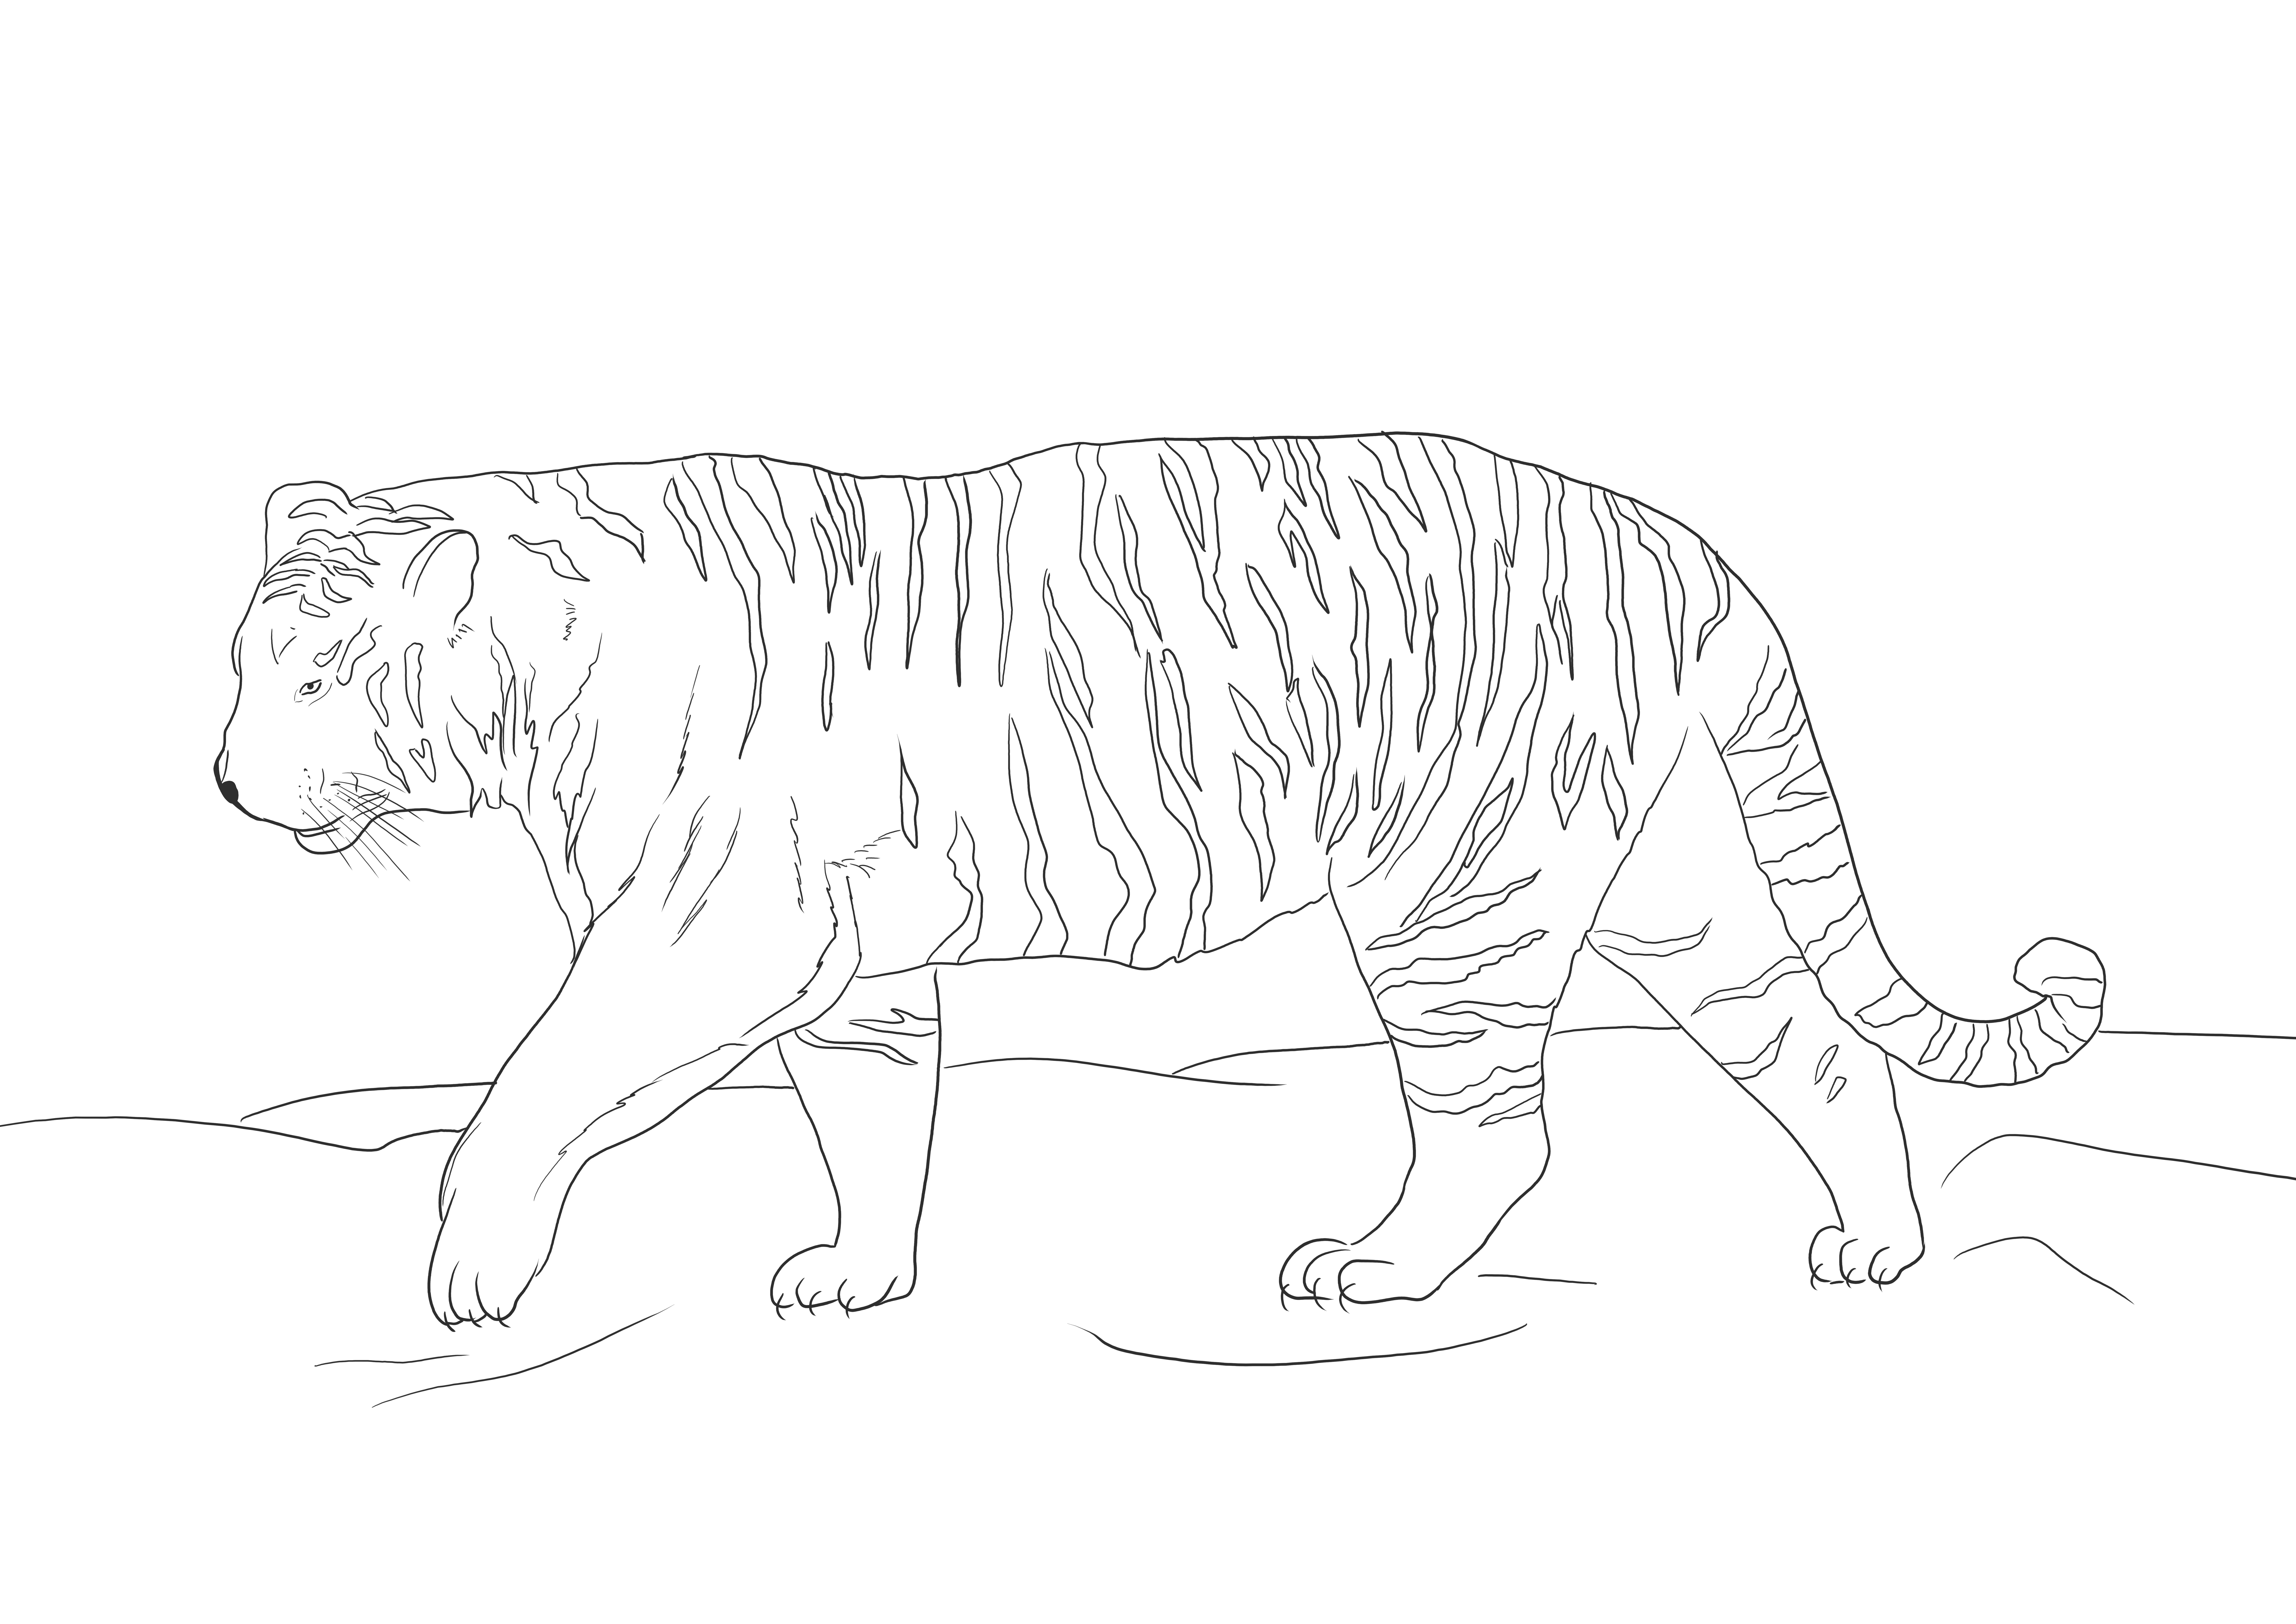 Tigre Siberiano - uma folha de colorir educacional gratuita